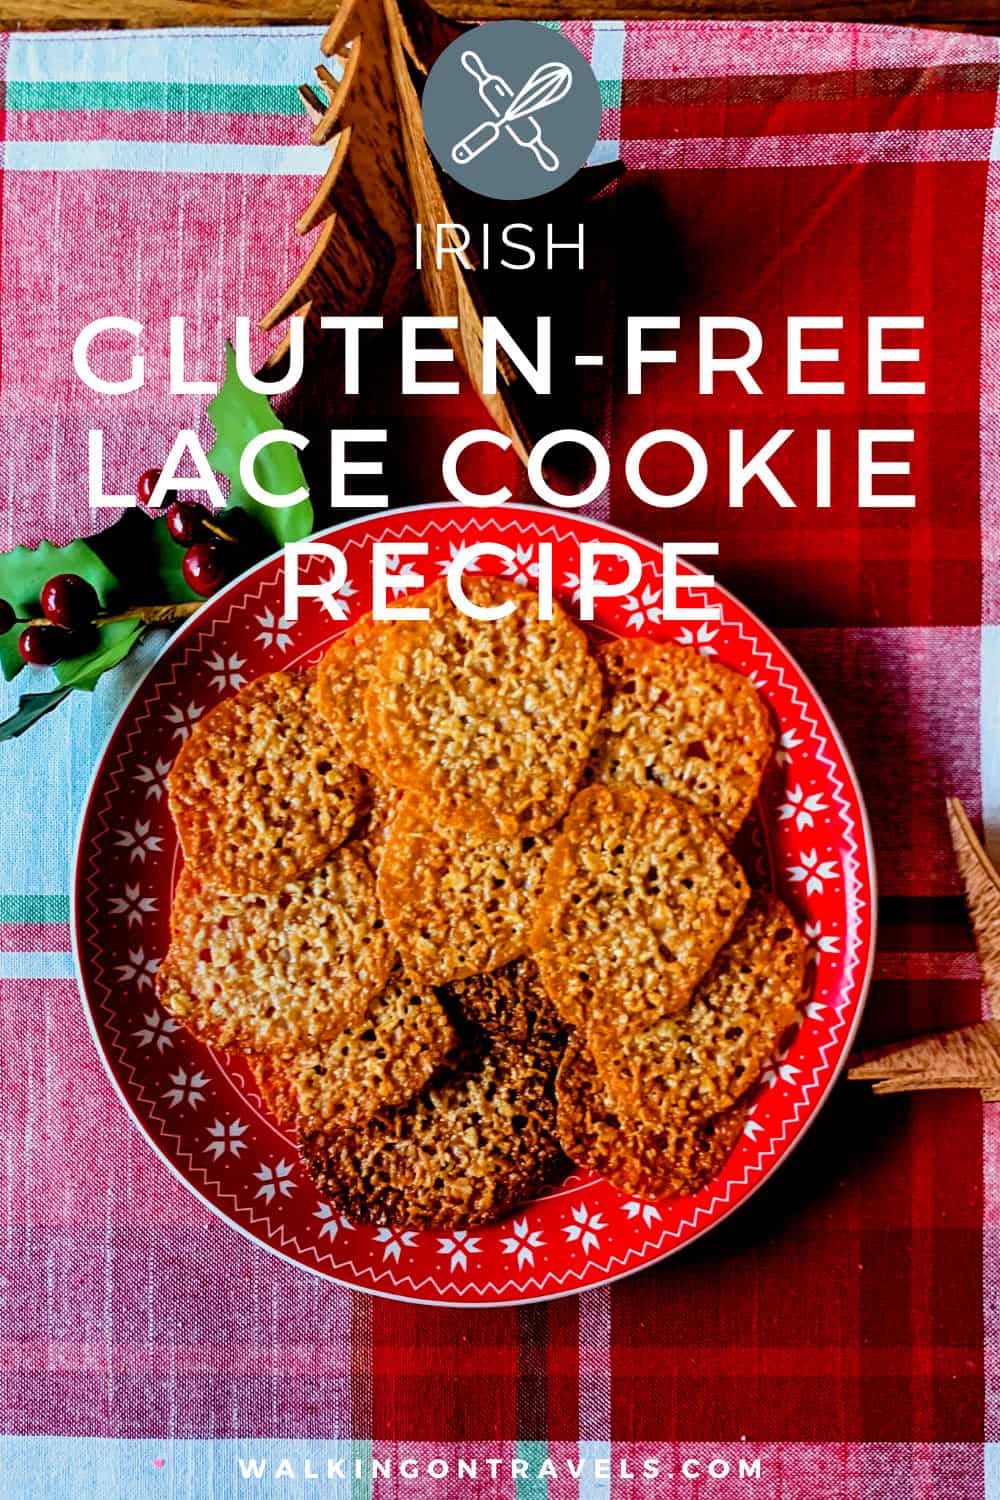 Lace Cookie recipe